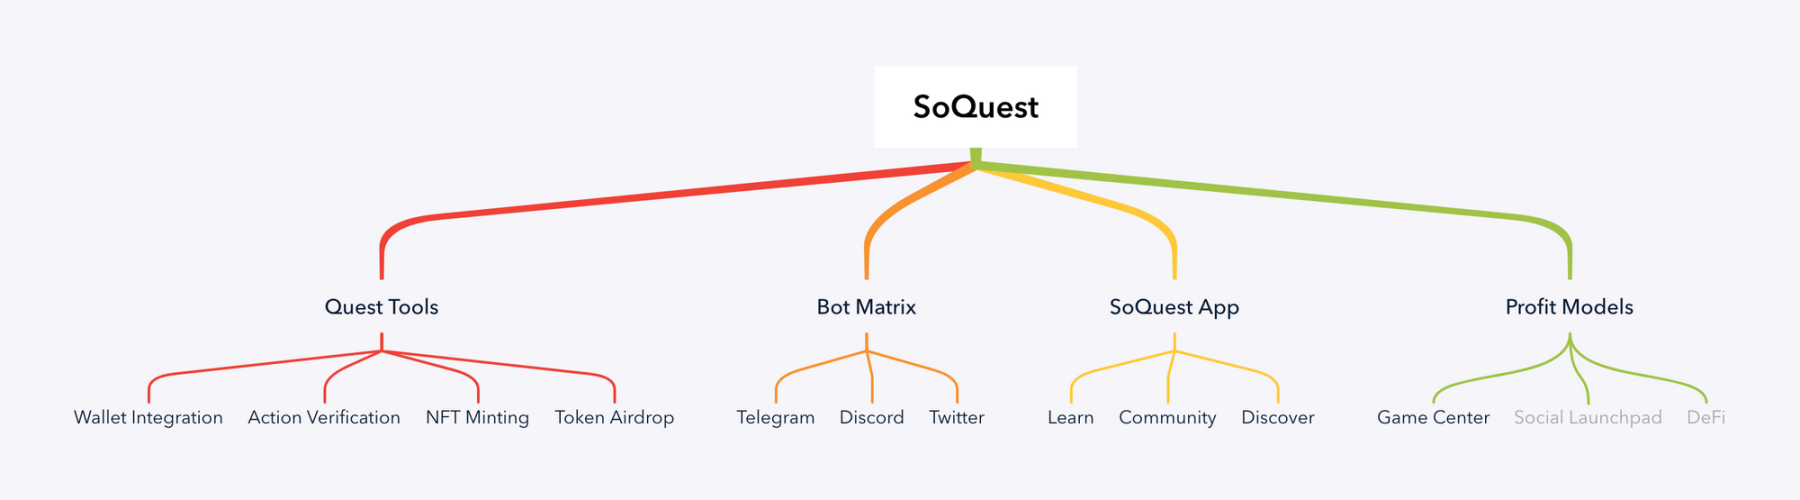 SoQuest 產品基礎與盈利模式